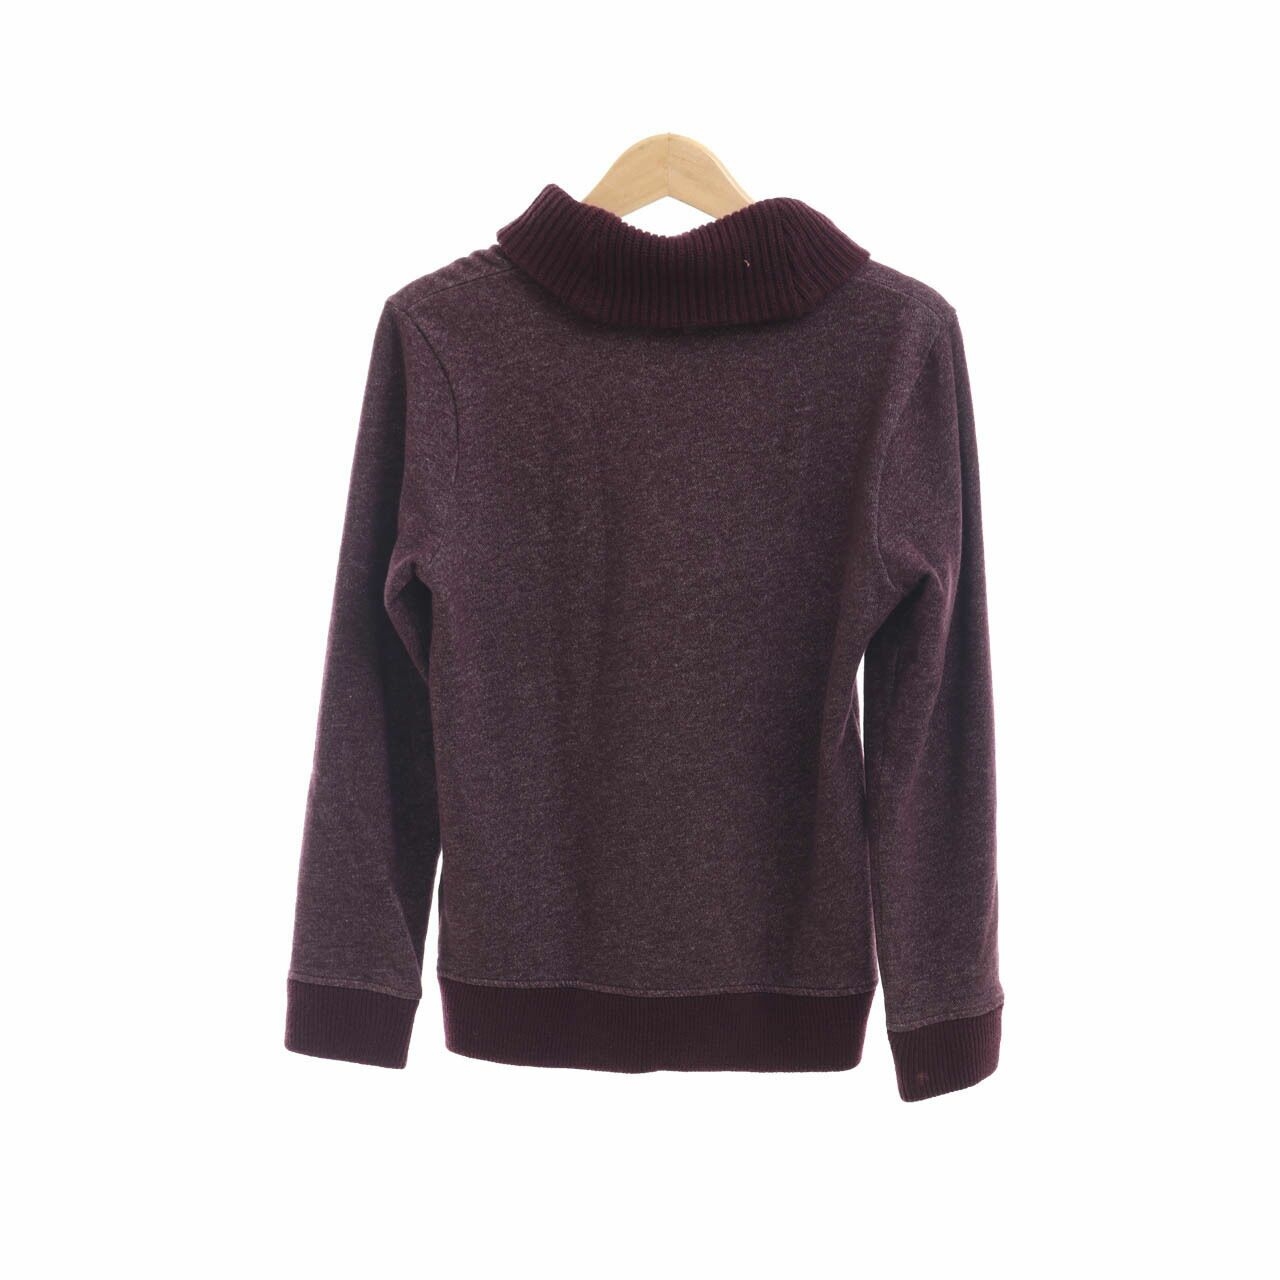 H&M Purple Turtle Neck Sweater